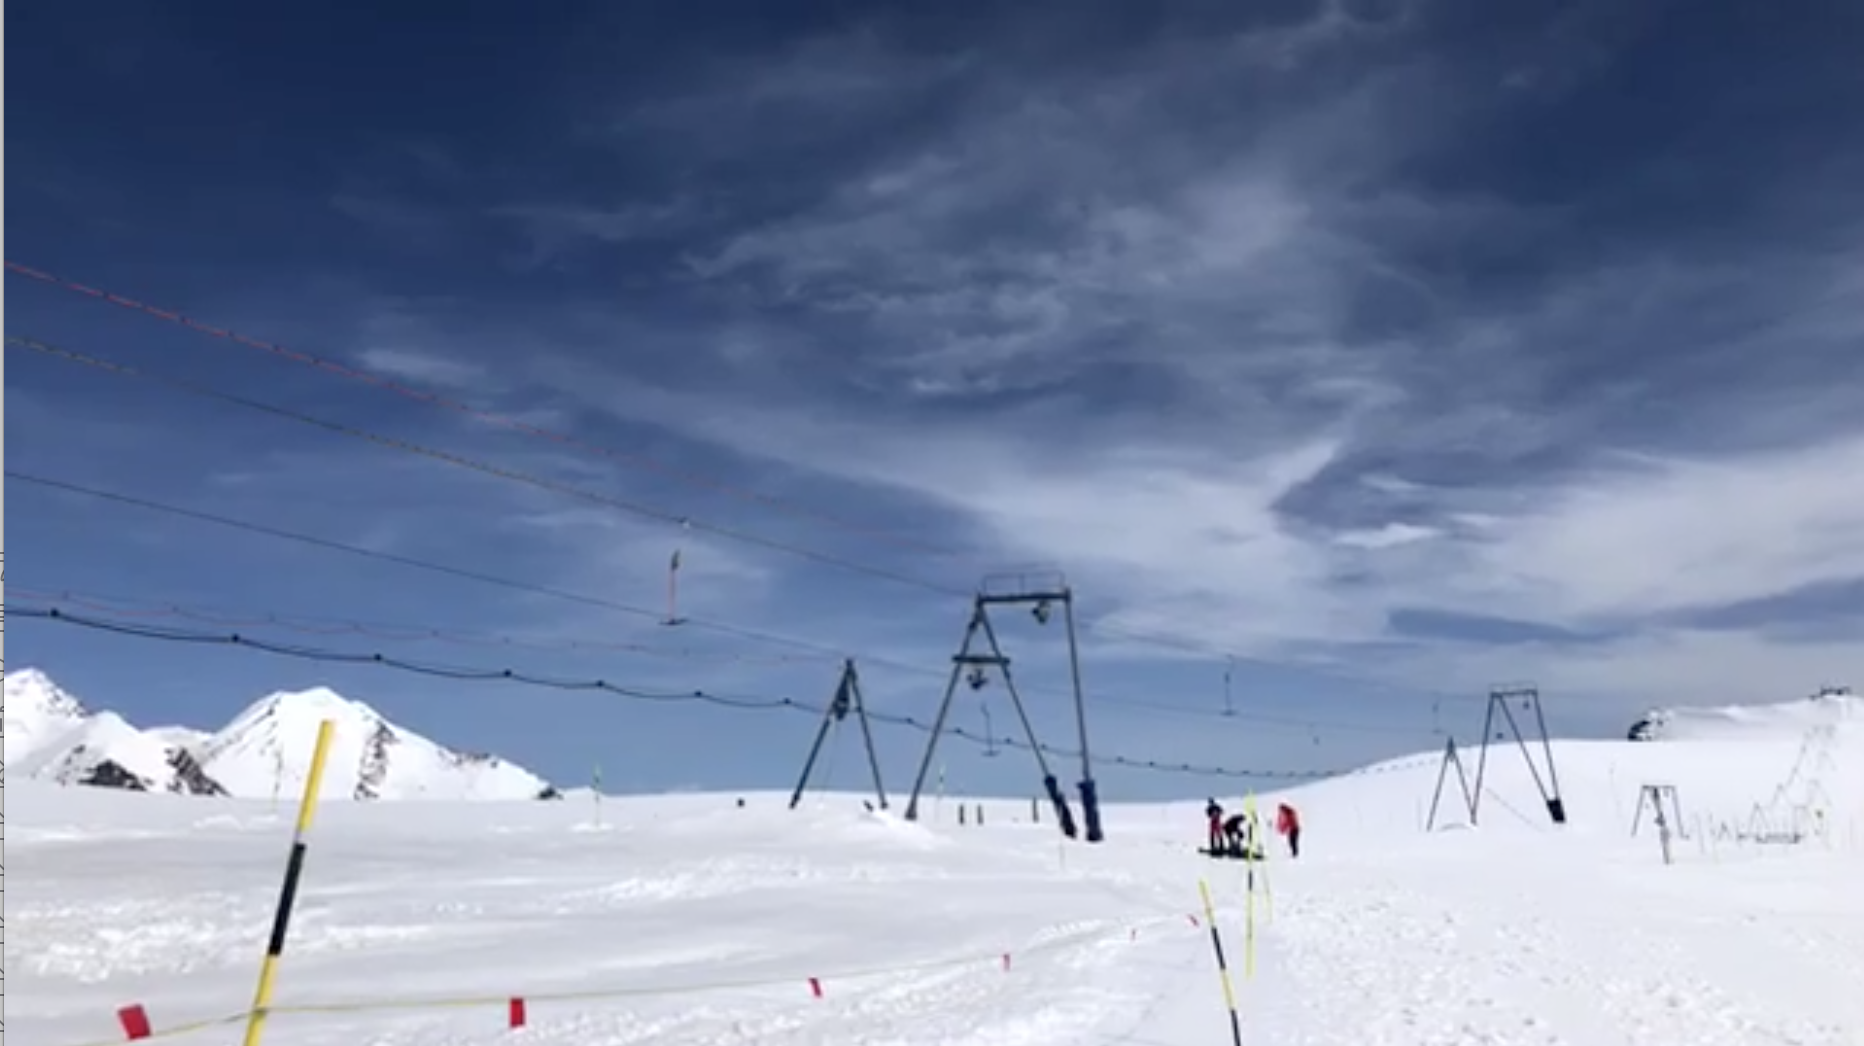 A ski slope